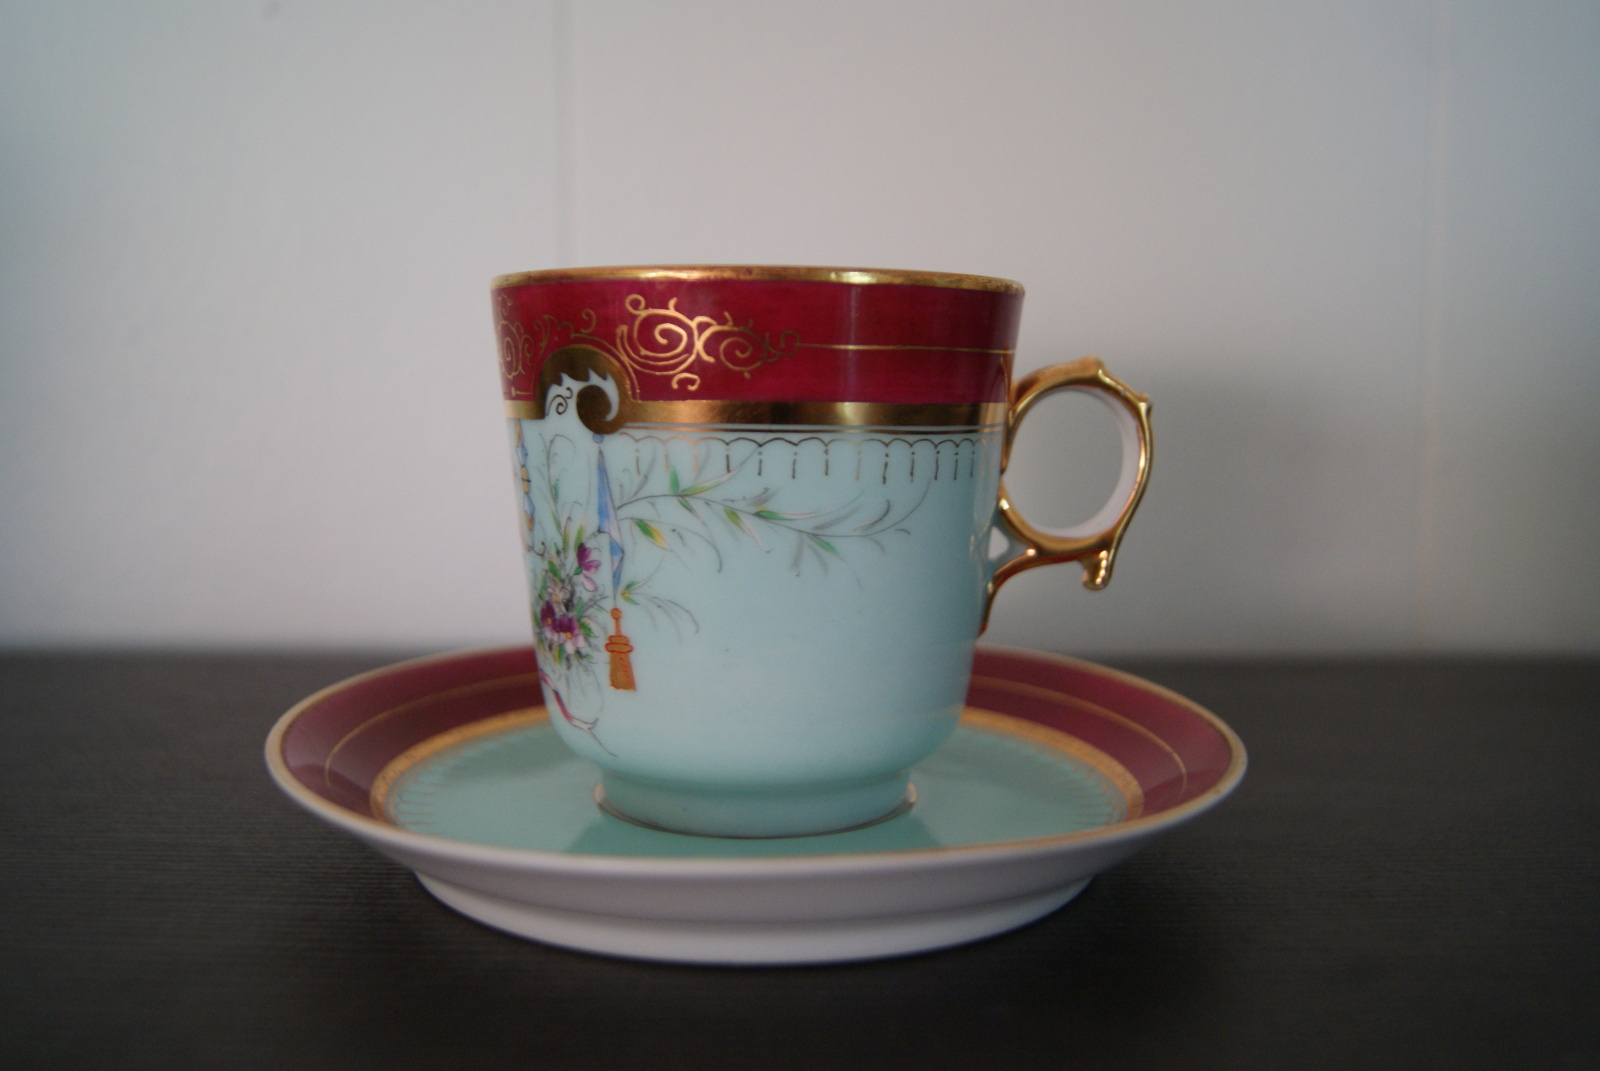 Waldenburg - Altwasser tea cup with saucer with Beautiful handpainted decor